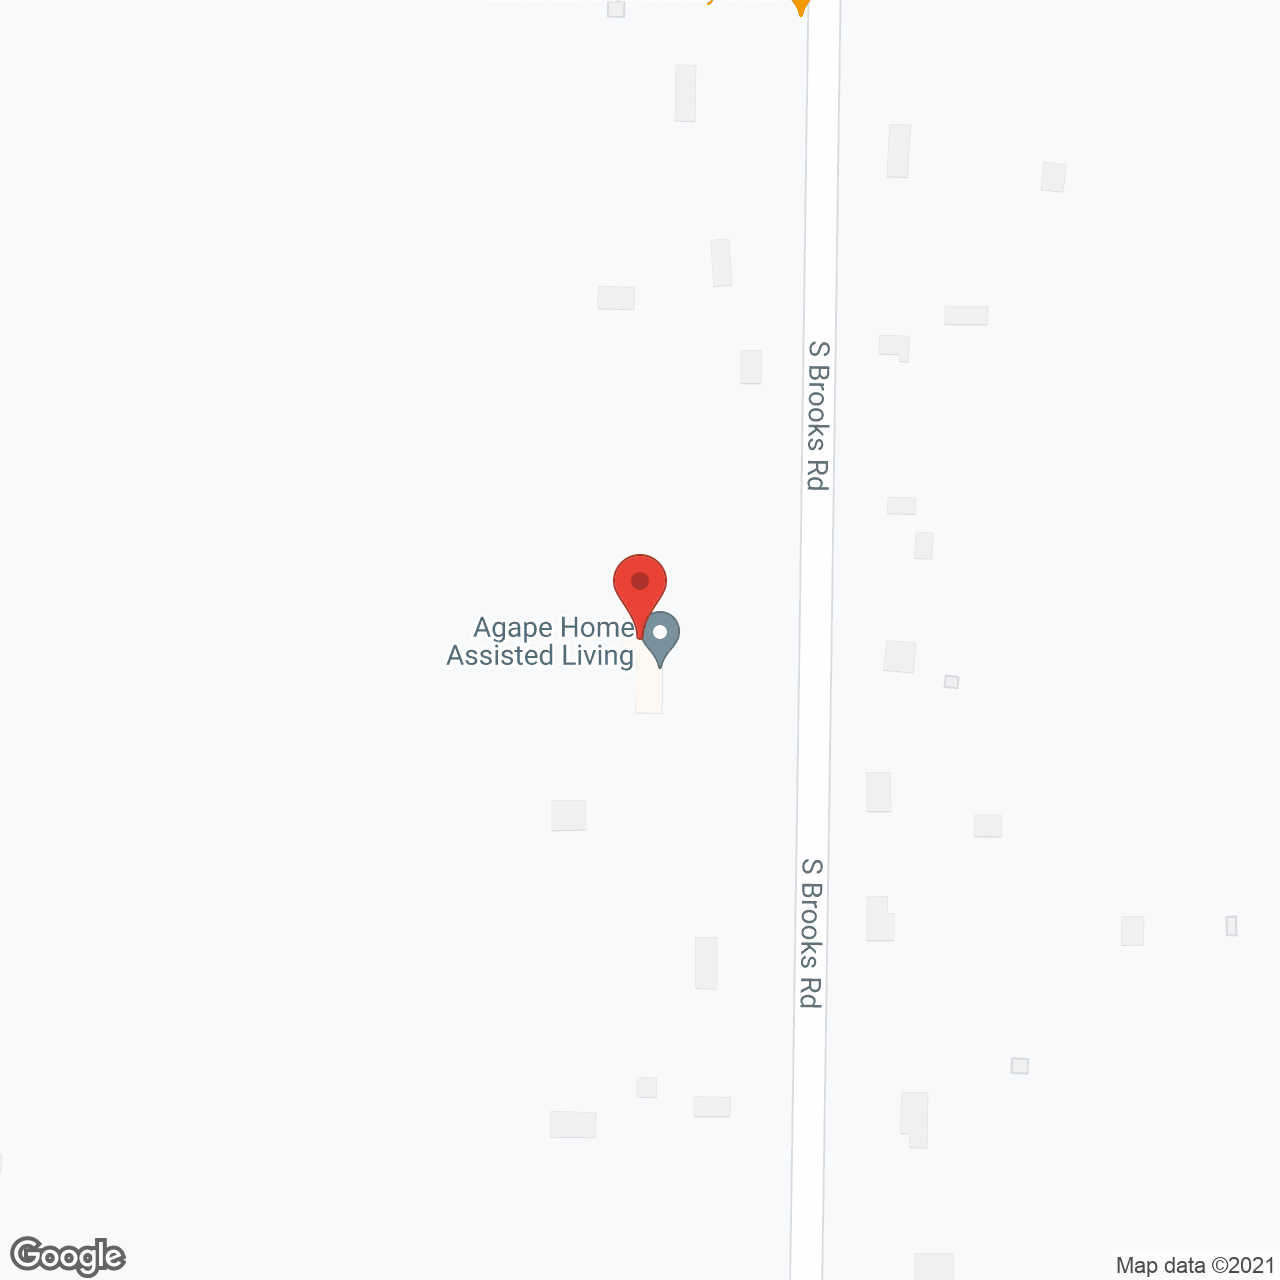 Agape Home in google map